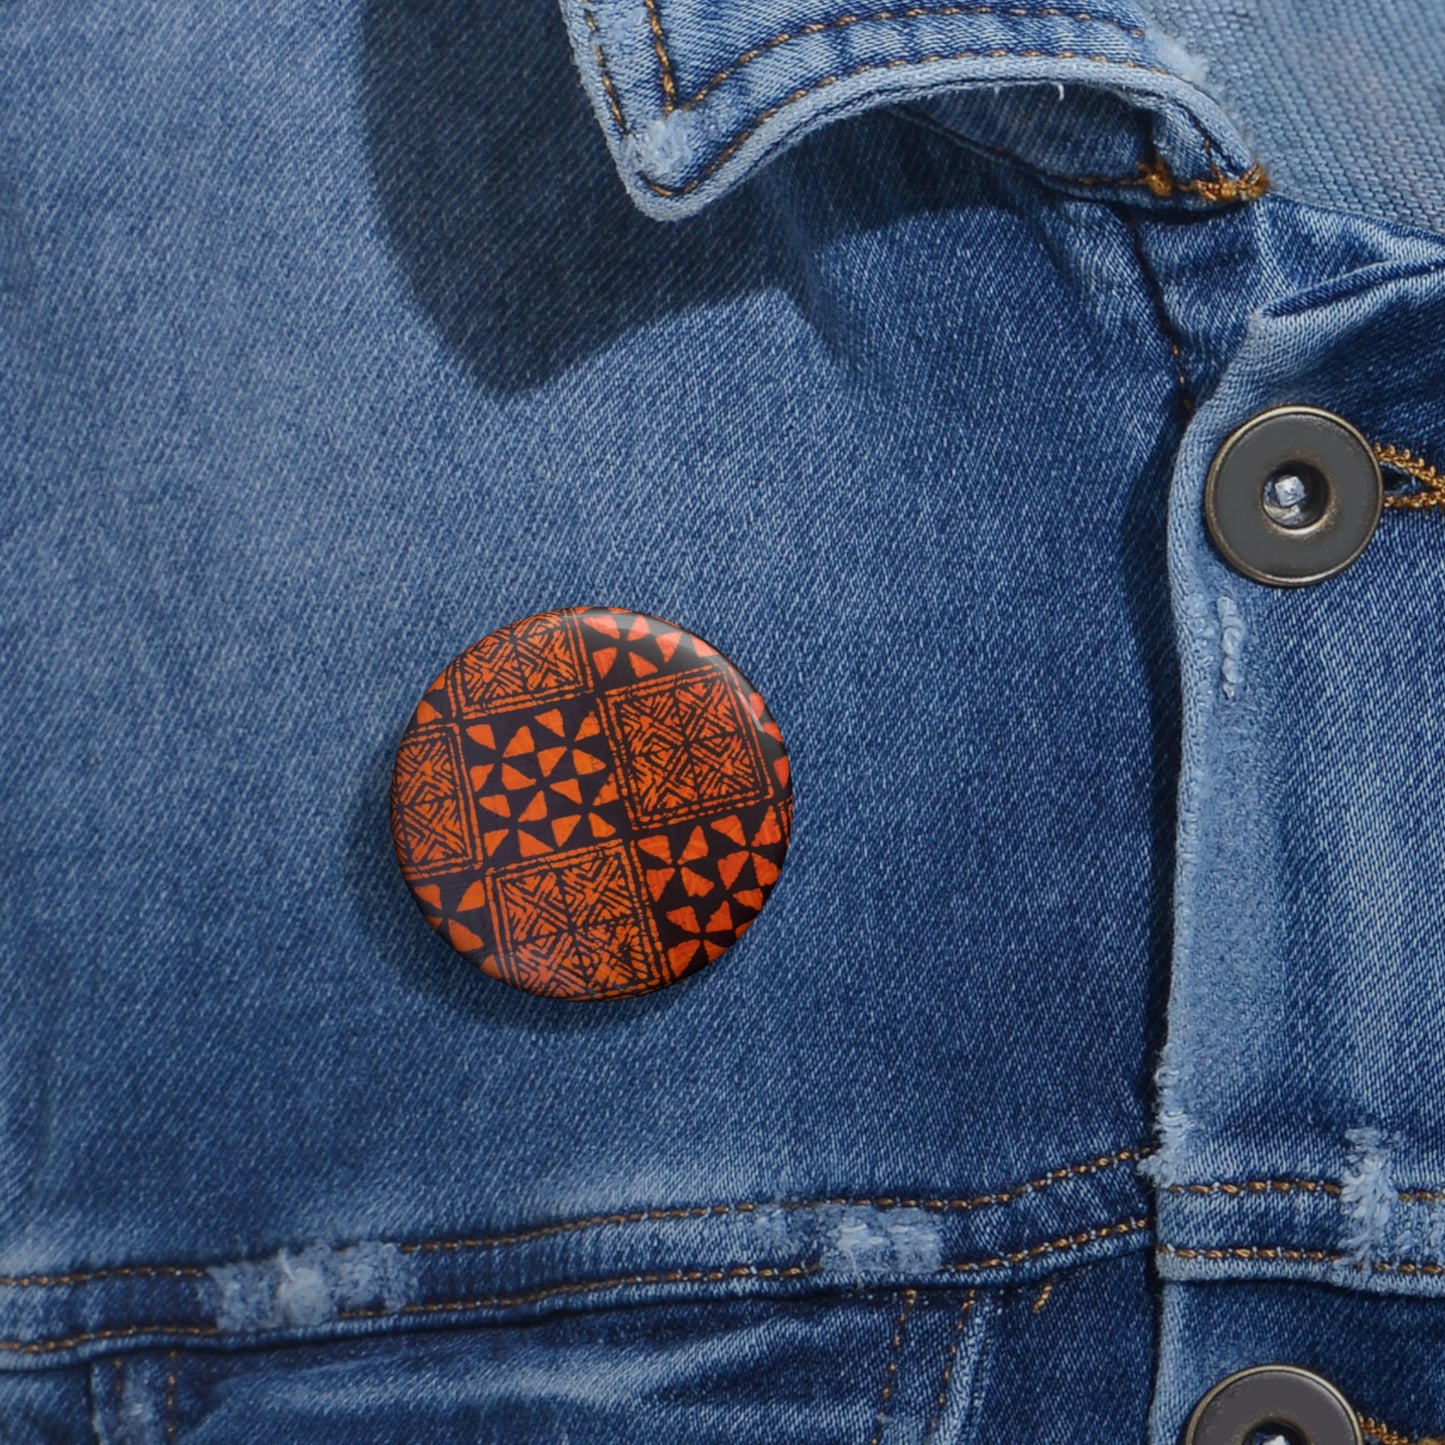 Orange and Black Batik Custom Pin Buttons